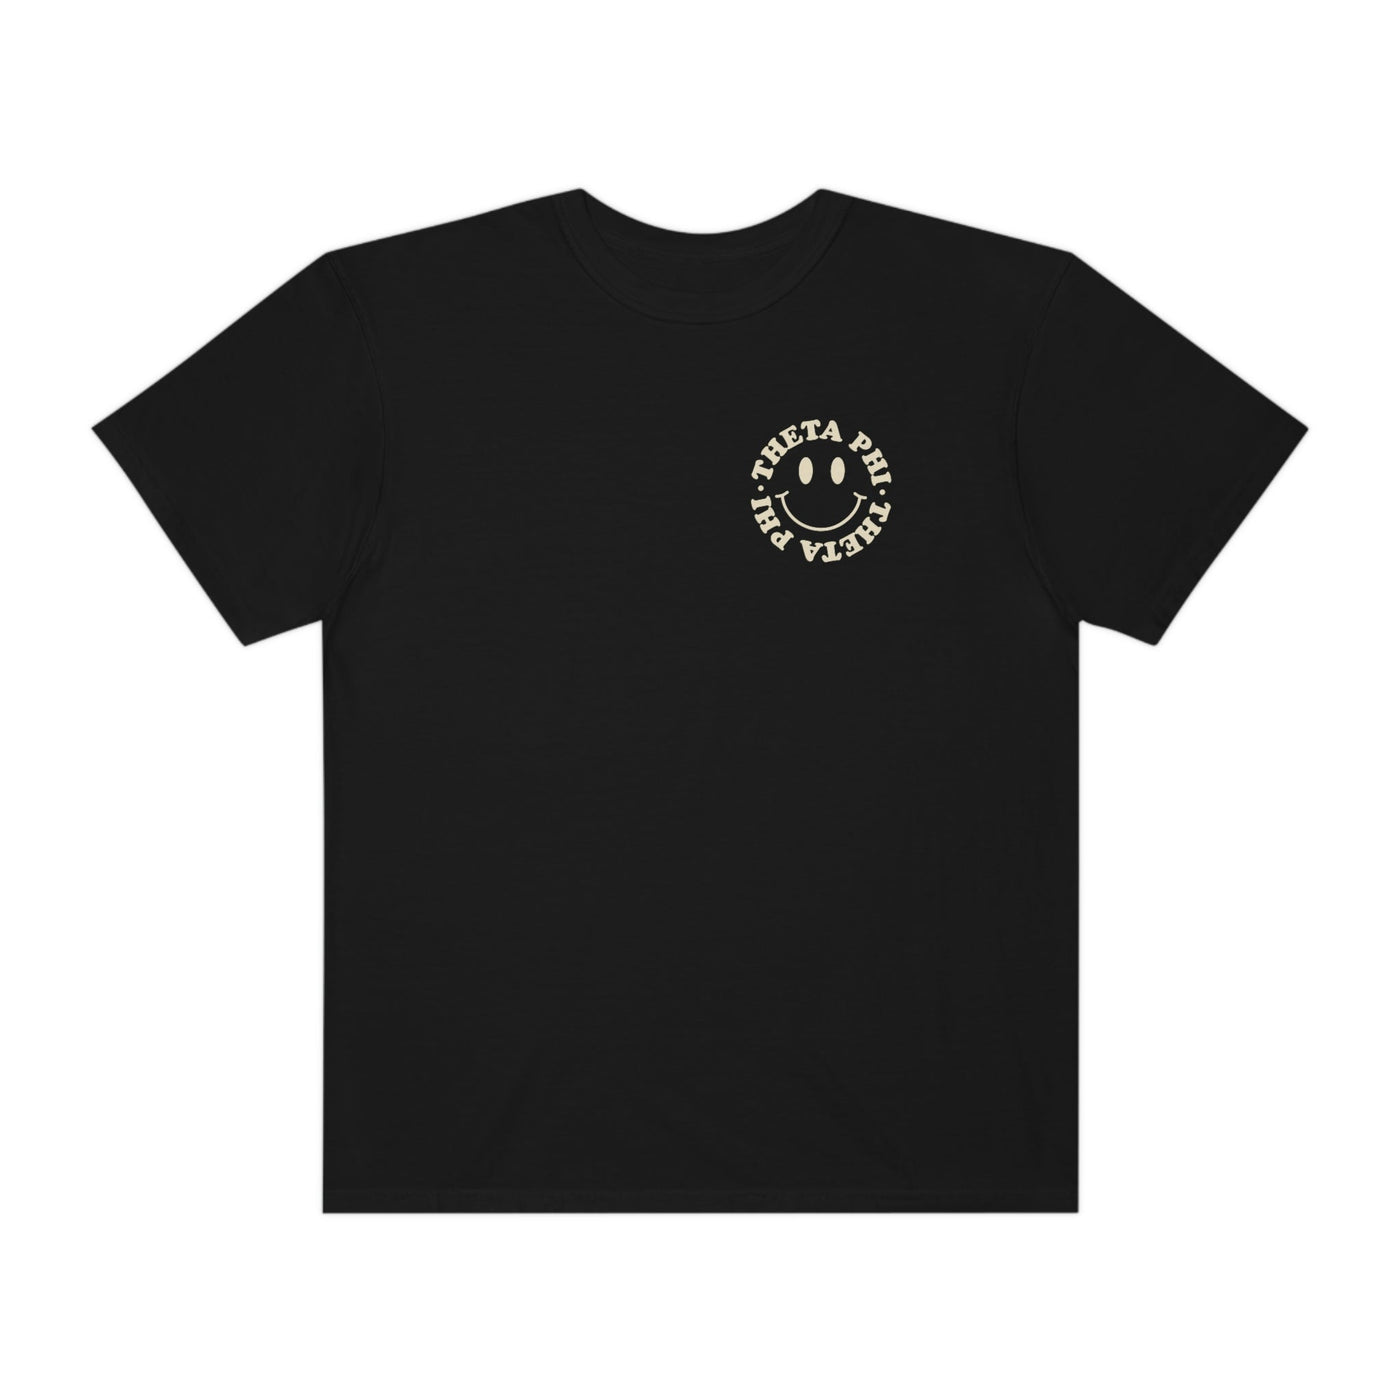 Theta Phi Alpha Smile Sorority Comfy T-Shirt